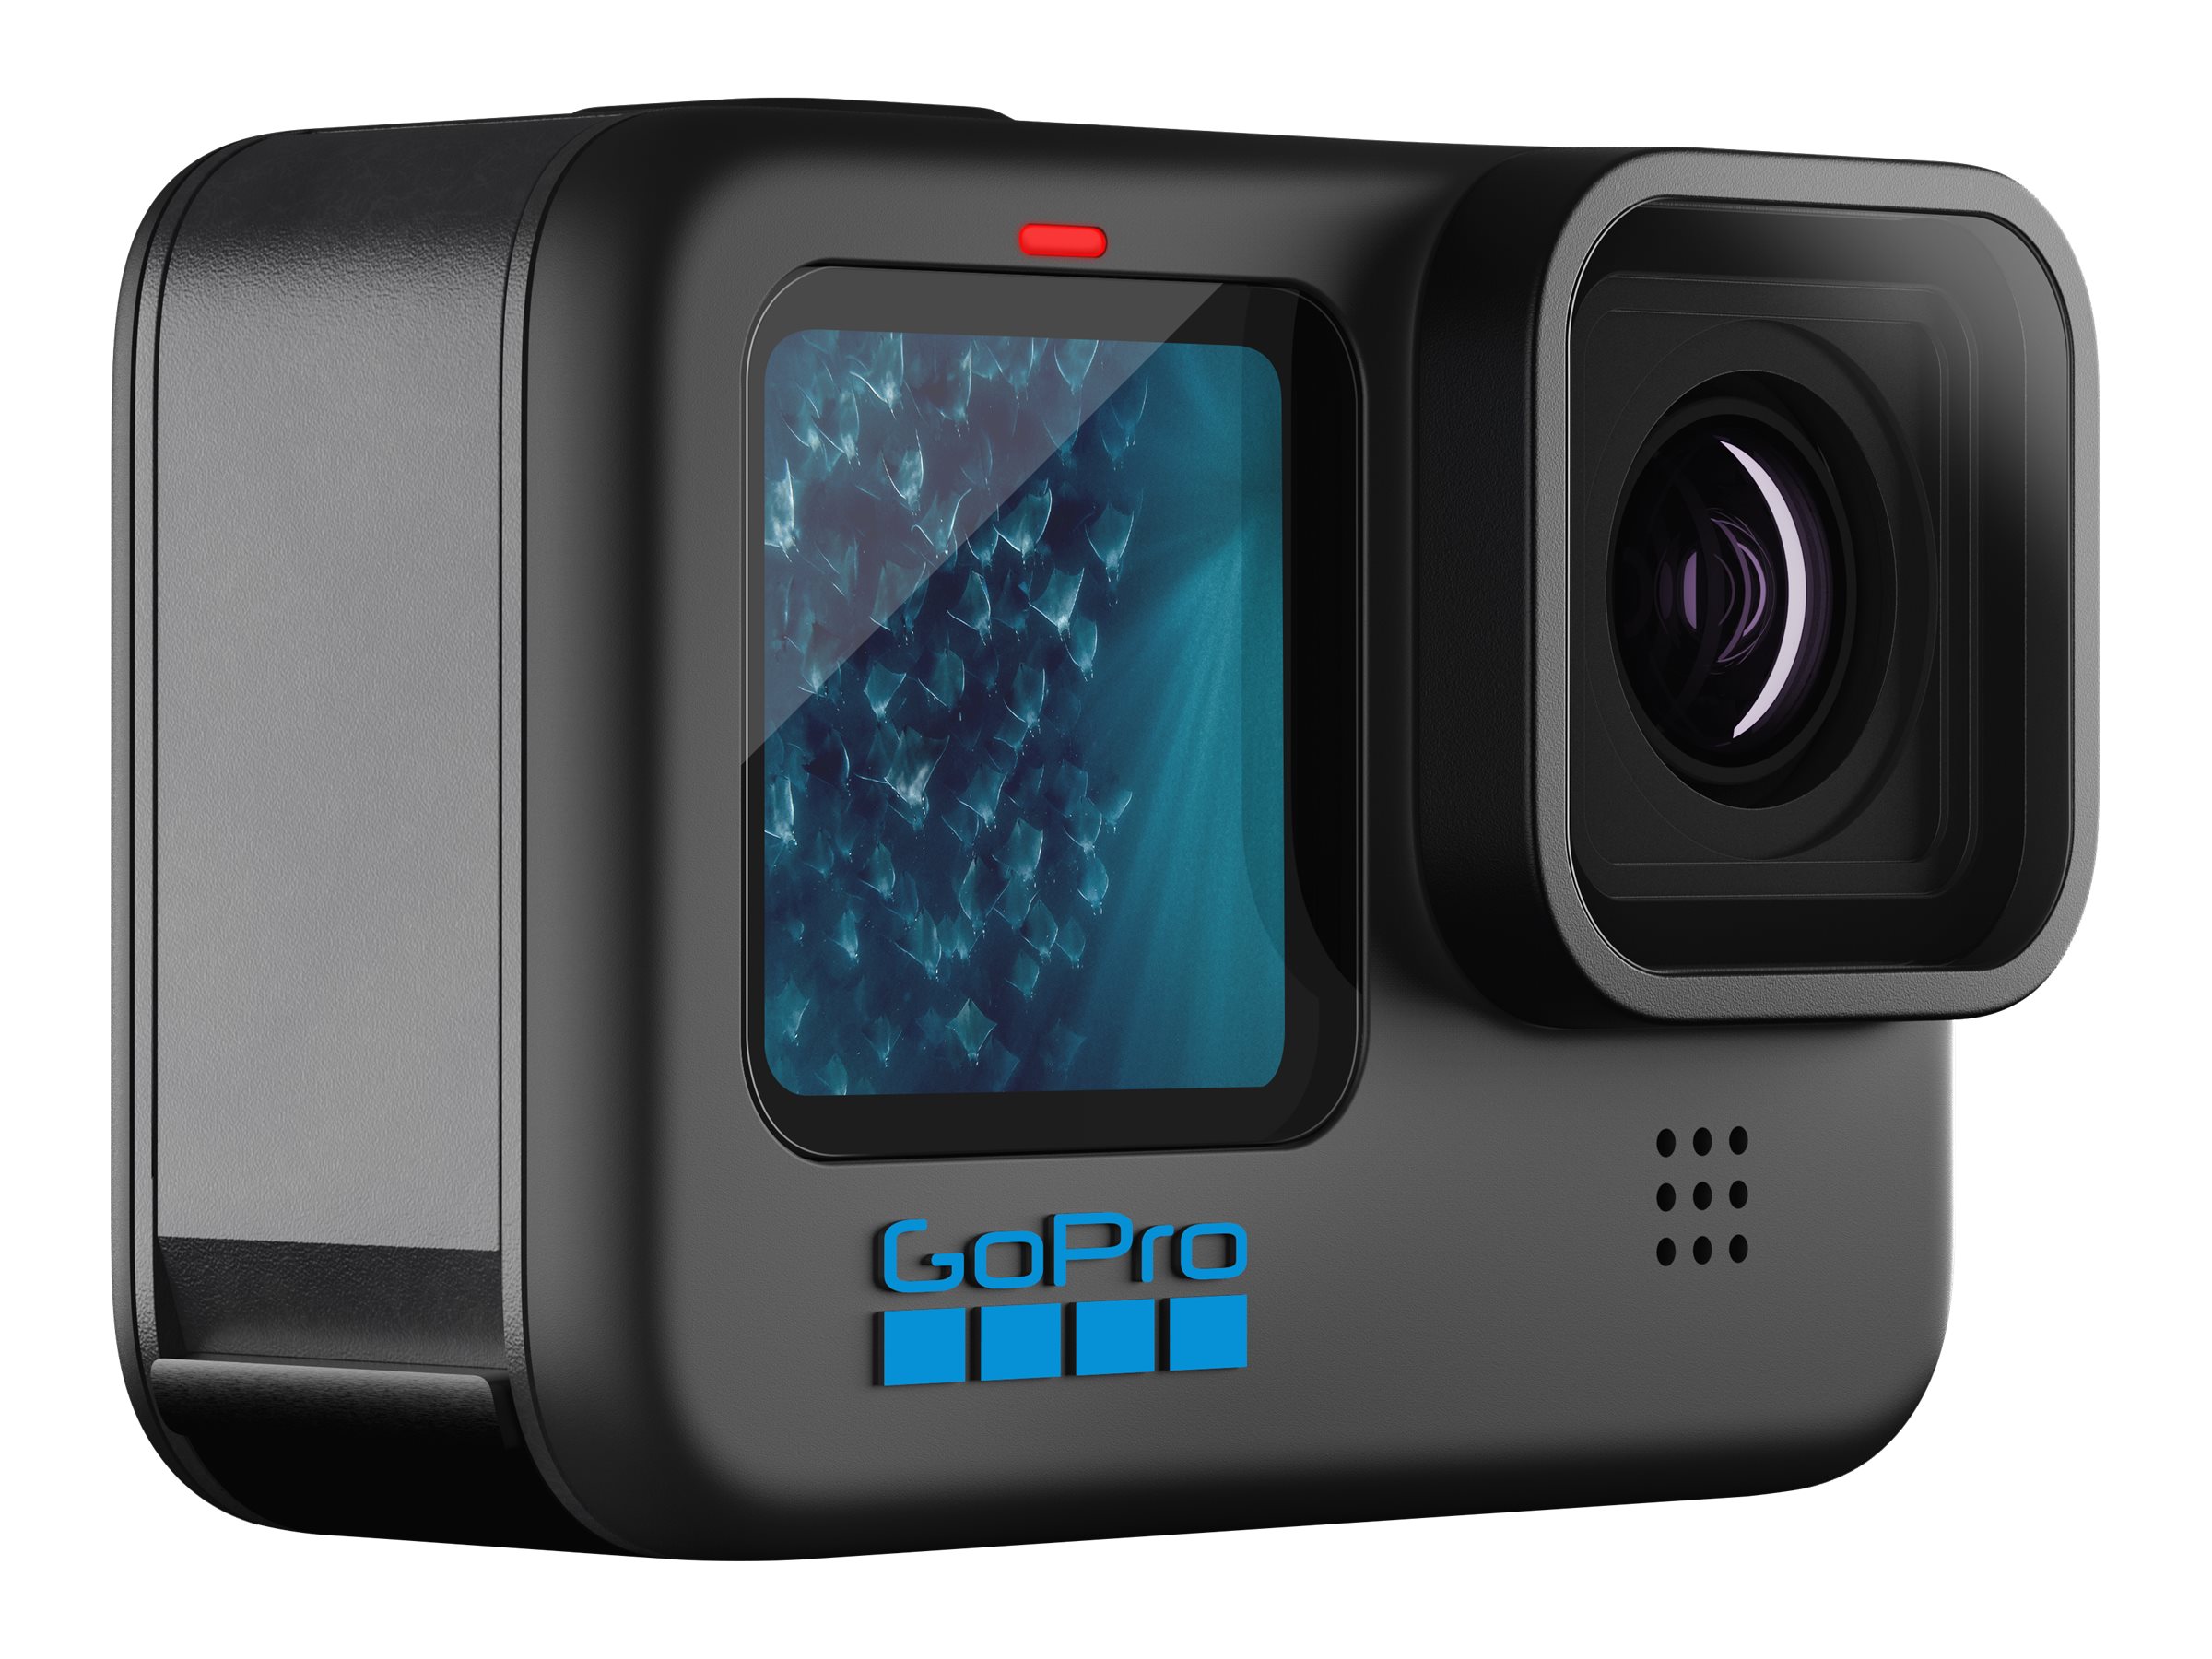 GoPro HERO 11 Action Camera - Black - GP-CHDHX-111-CN